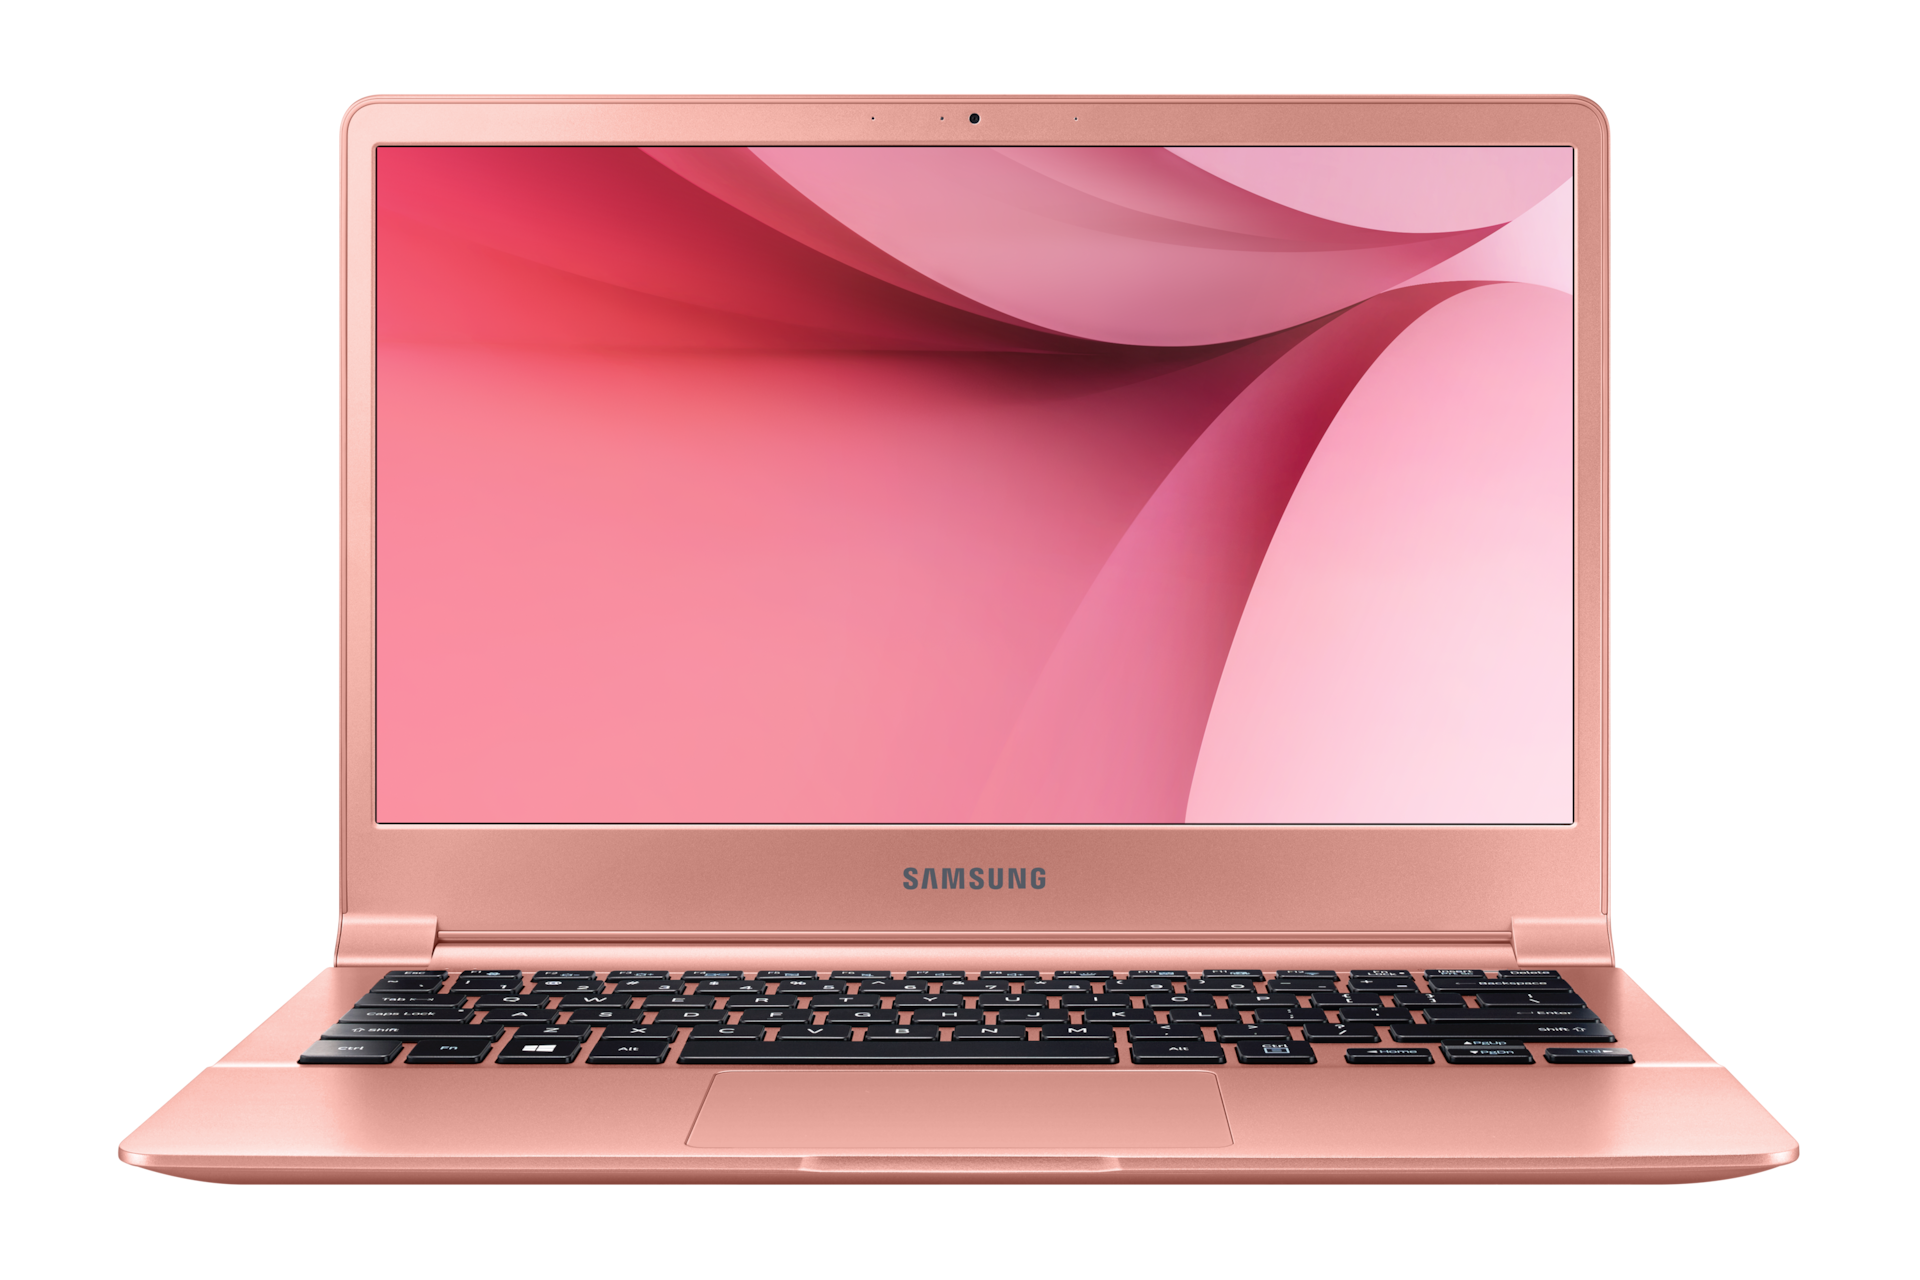 Ноутбук картинка. Samsung Notebook. Ноутбук розовый самсунг. Компьютер нетбуки самсунг. Samsung np900x5t.